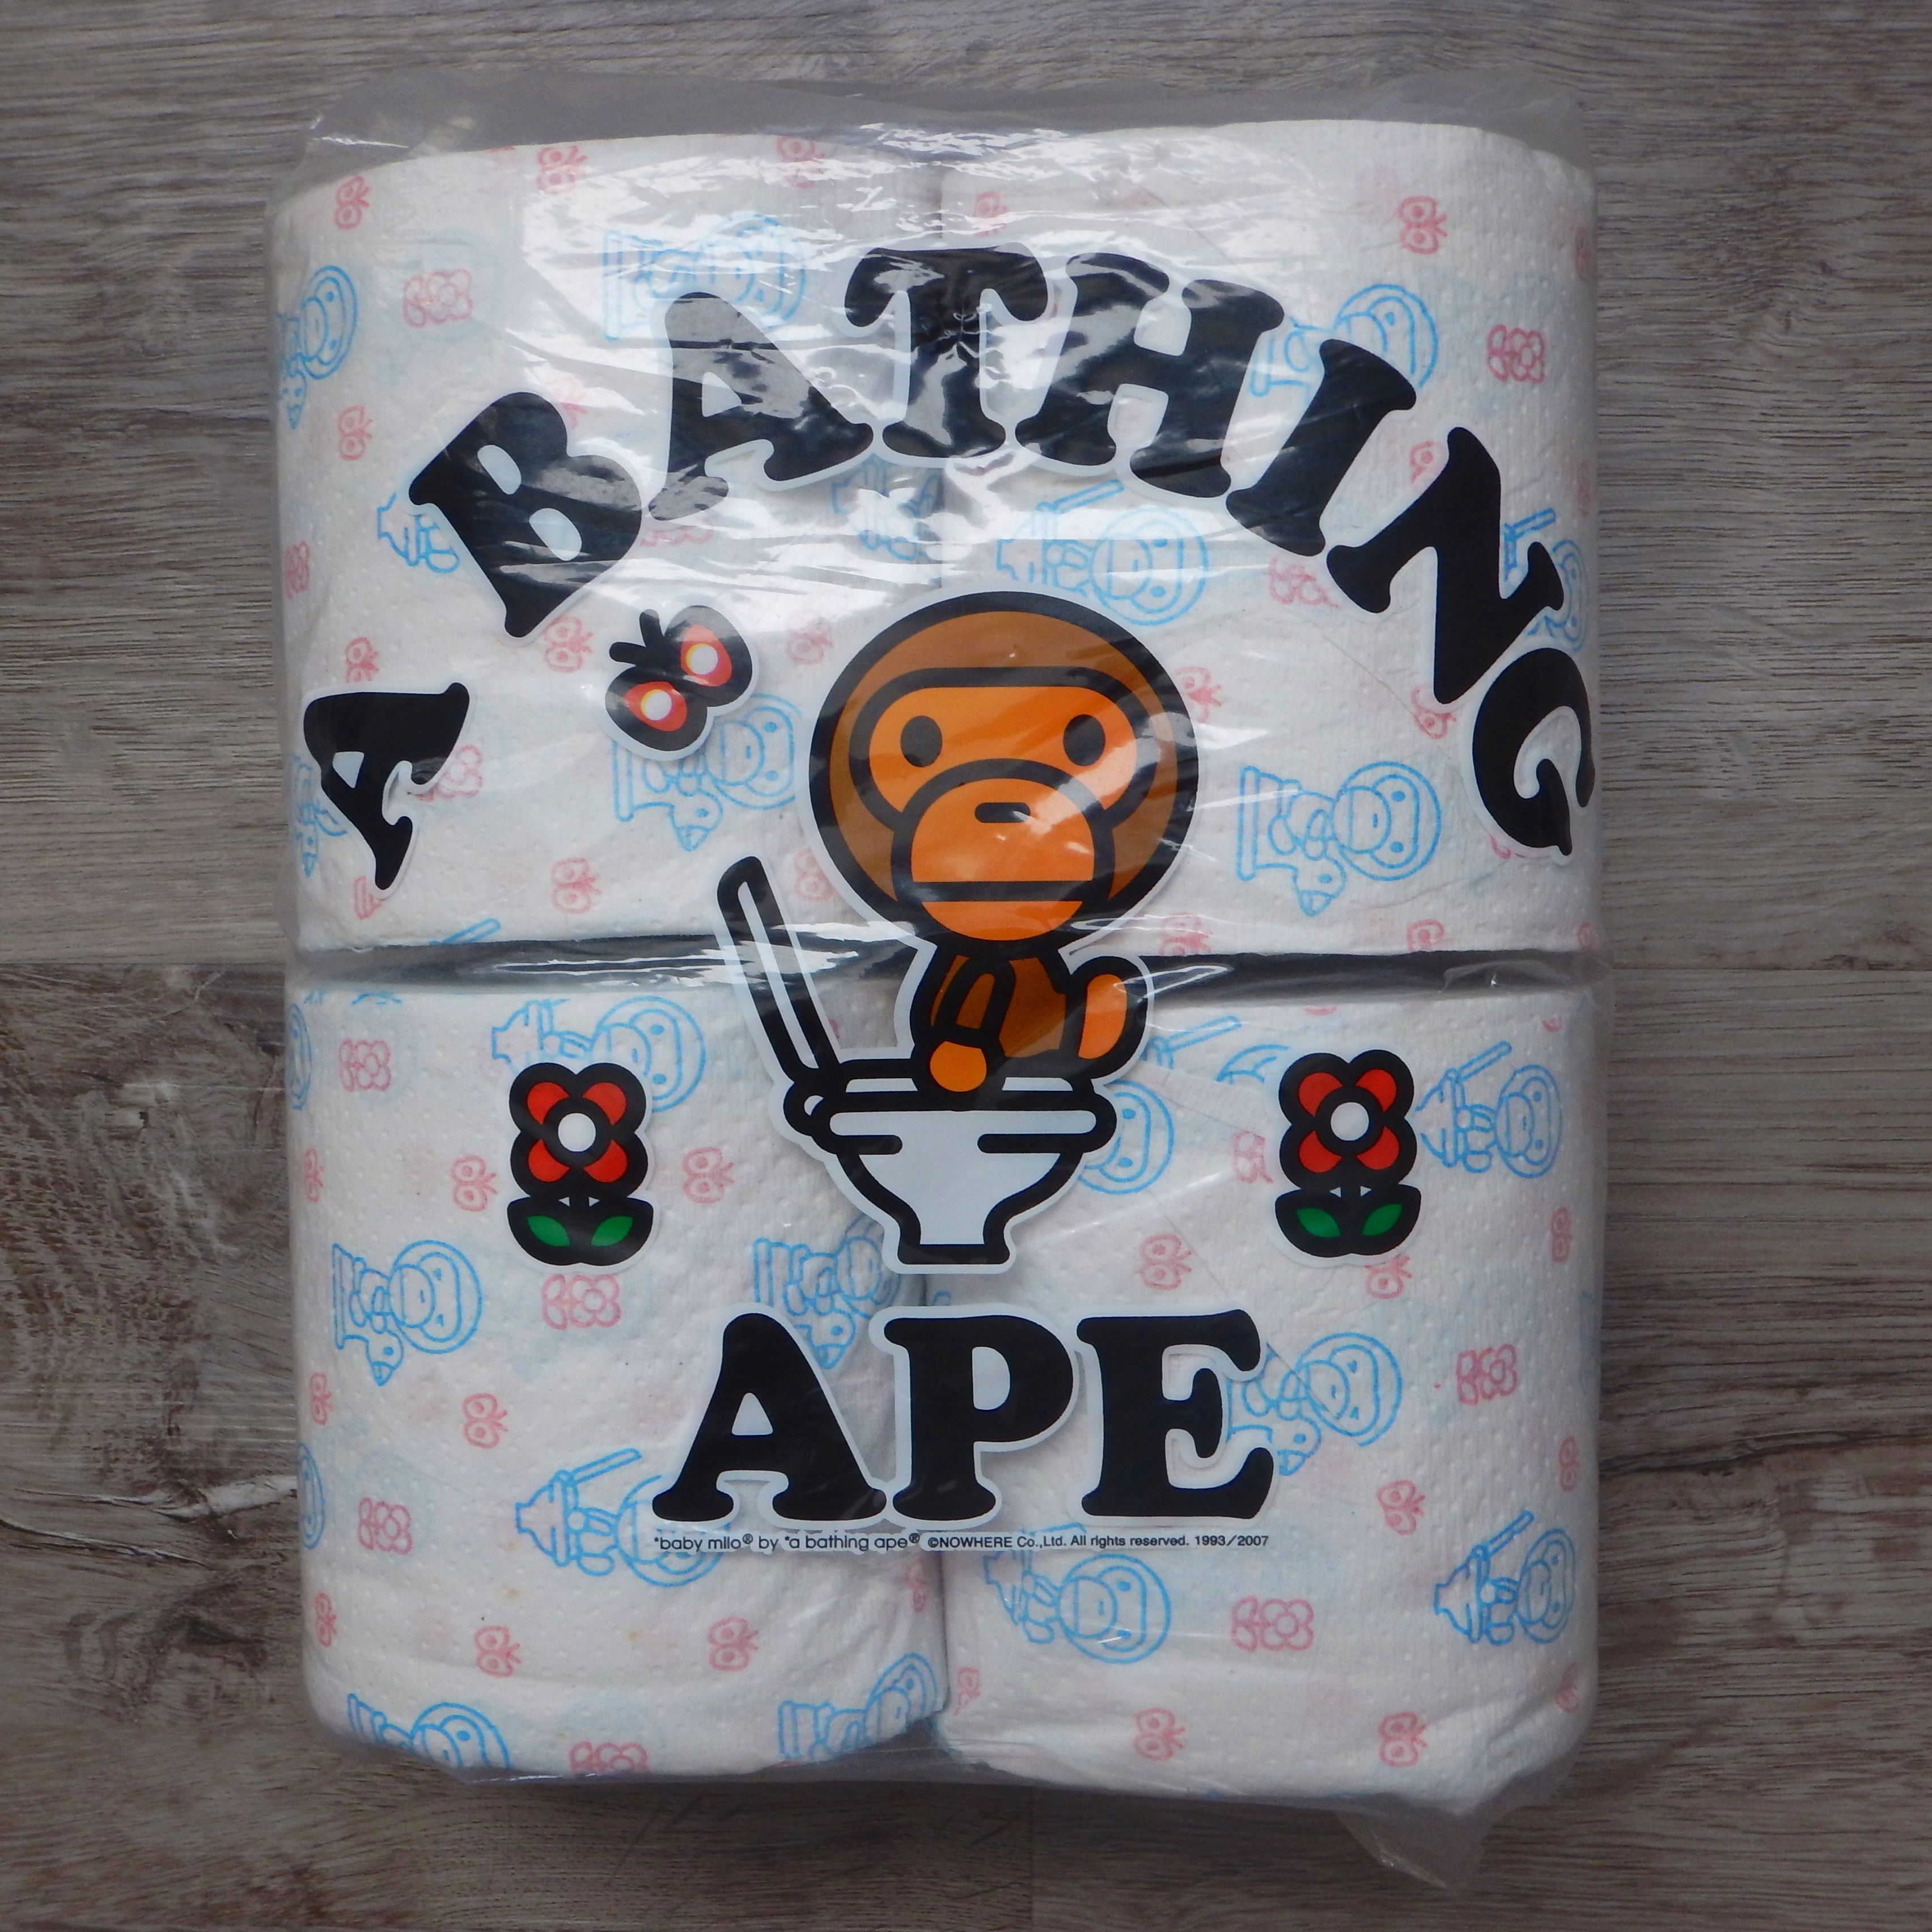 2007 Bape Baby Milo Toilet Paper 4-Pack